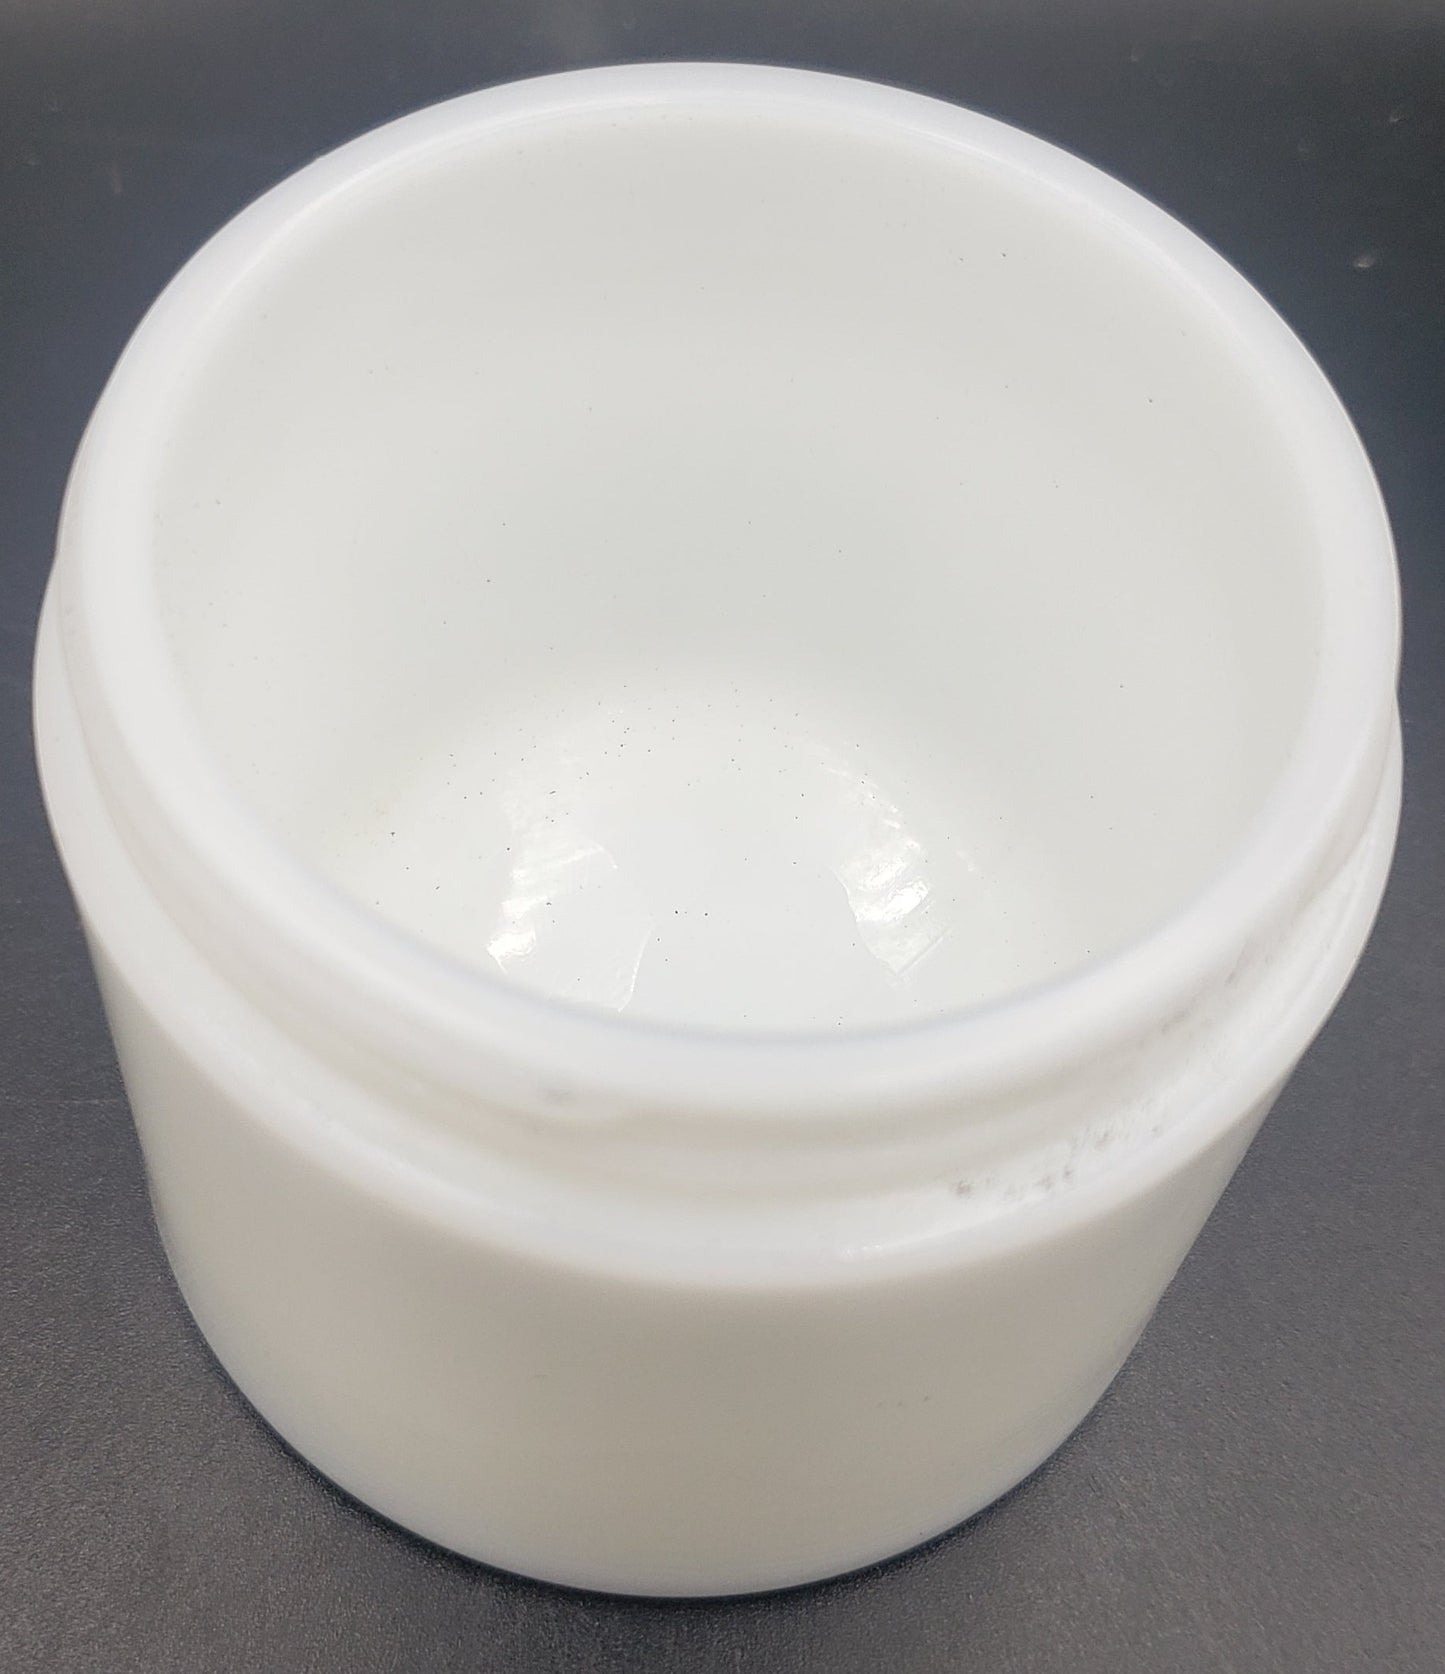 Lustre-Creme Shampoo Jar